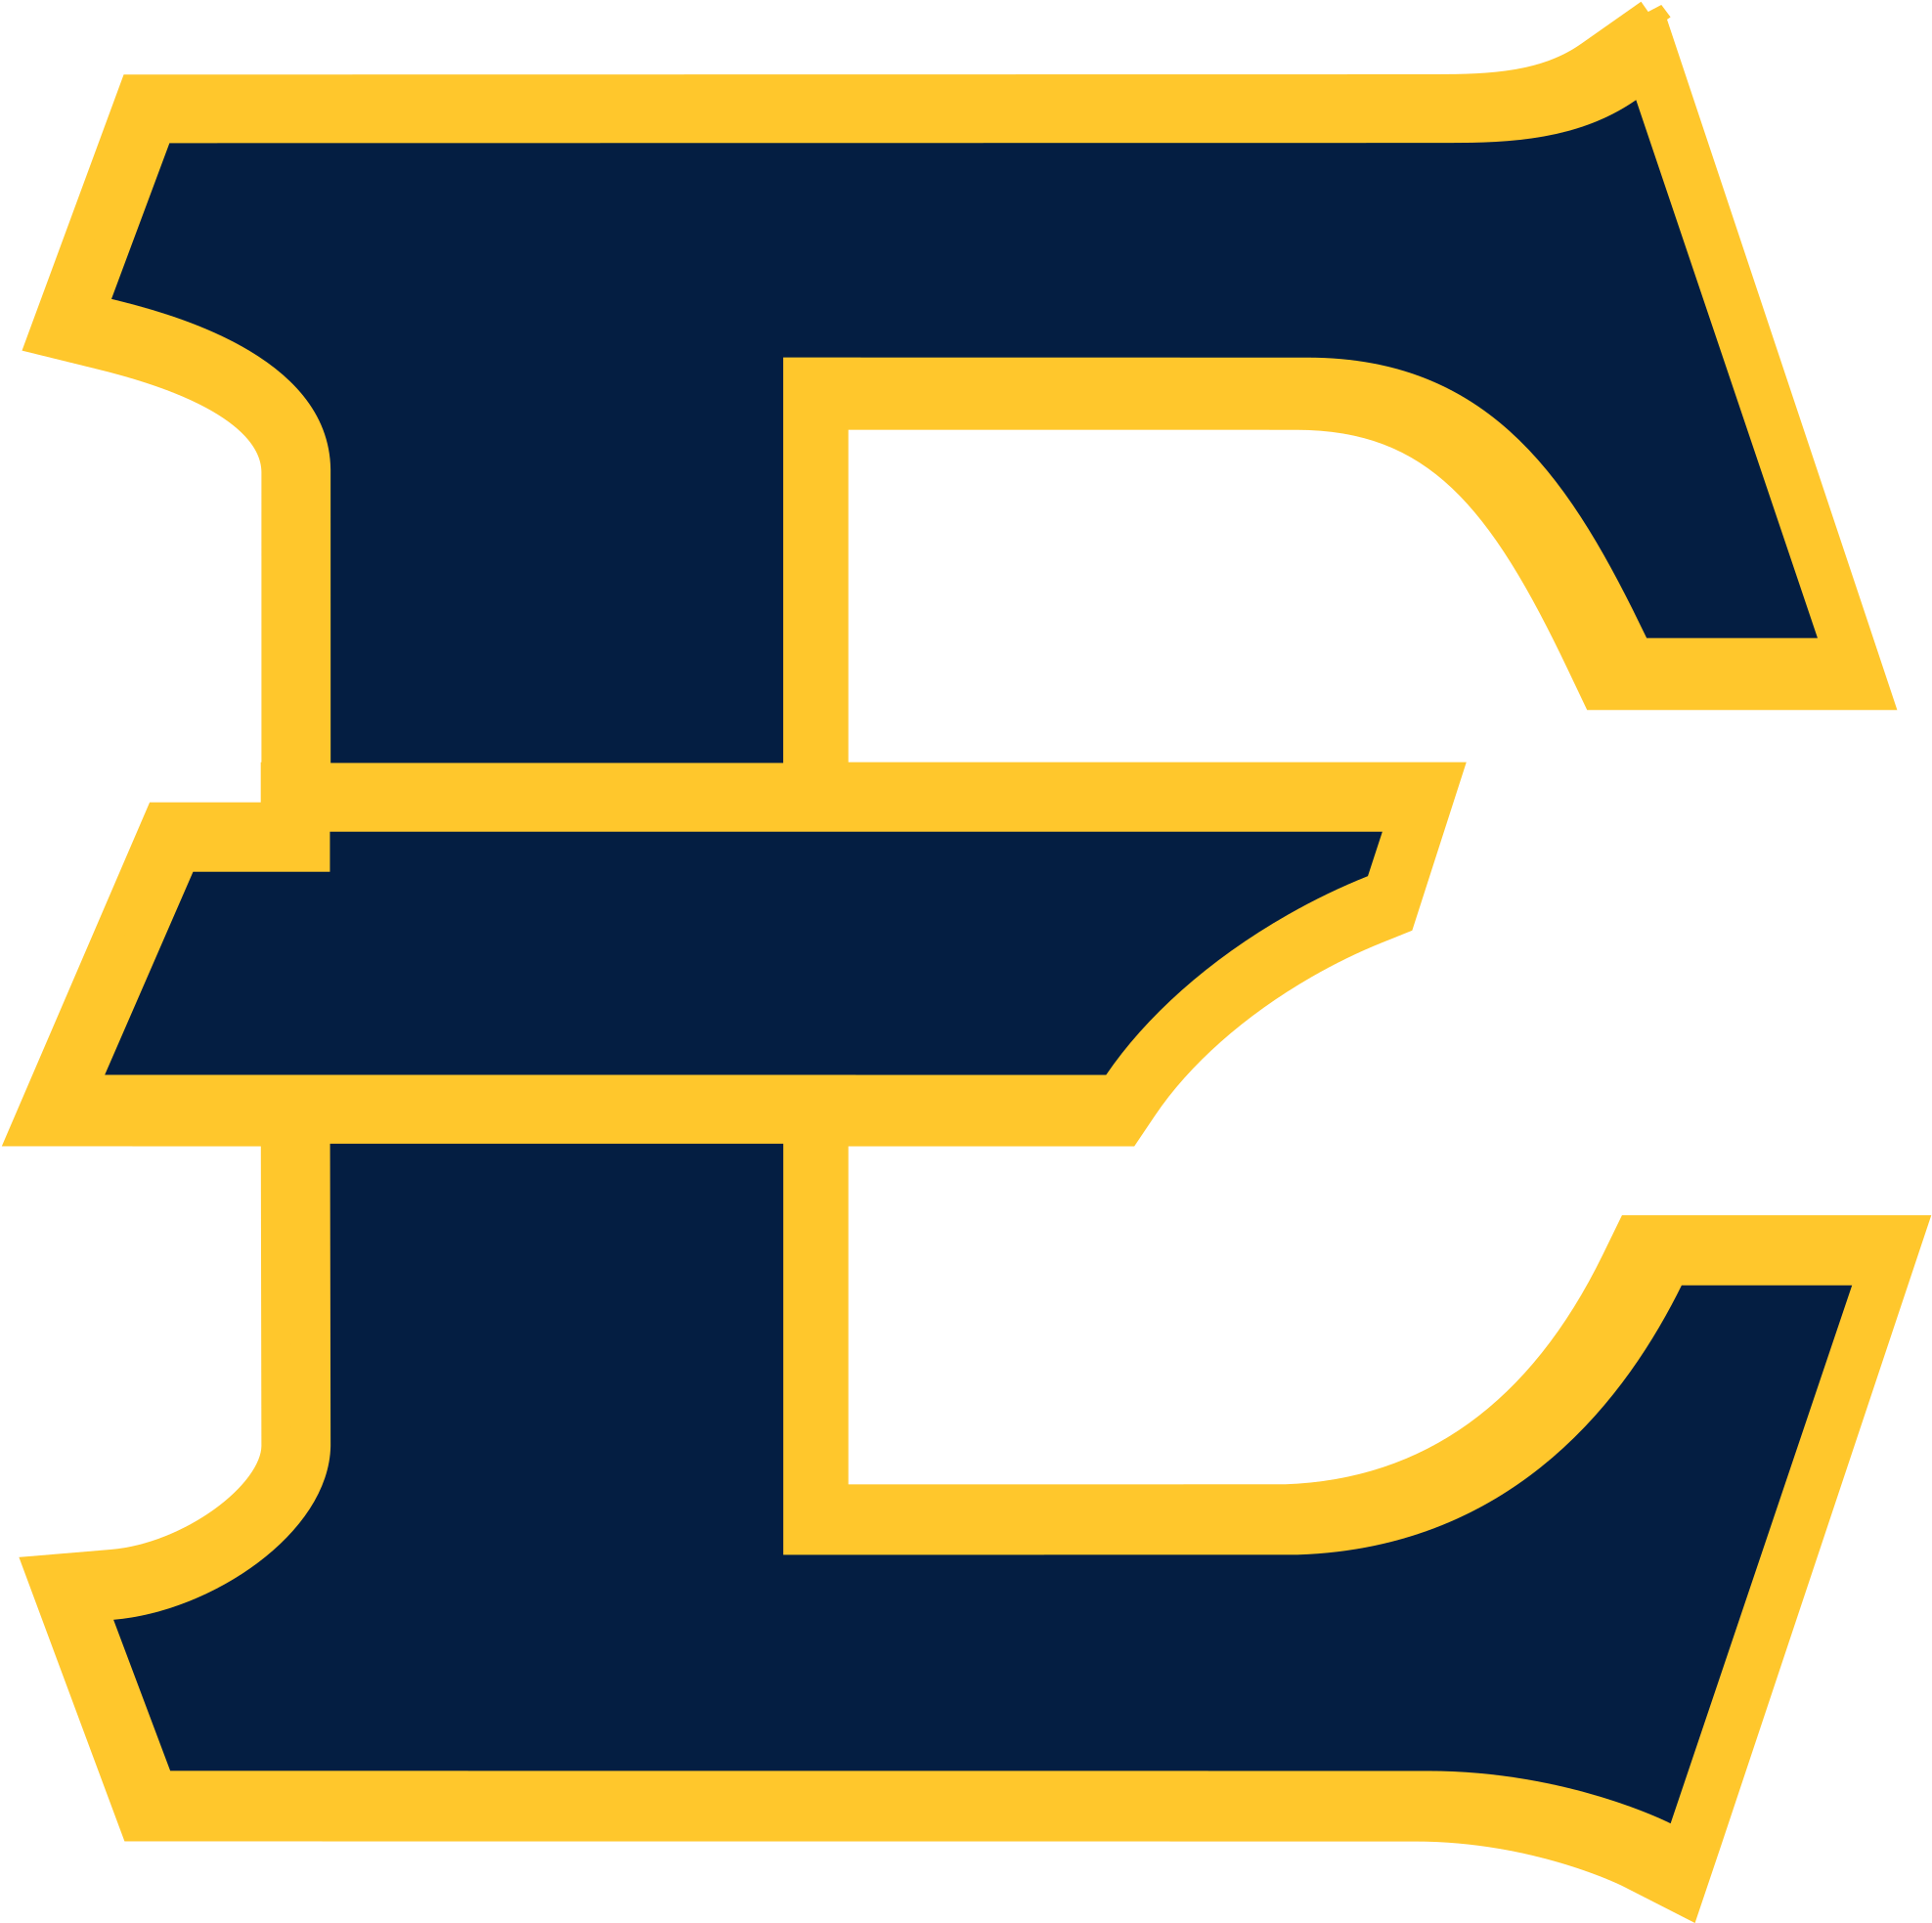 2017 East Tennessee State Buccaneers Football Team - East Tennessee State Buccaneers Logo (2000x1989)